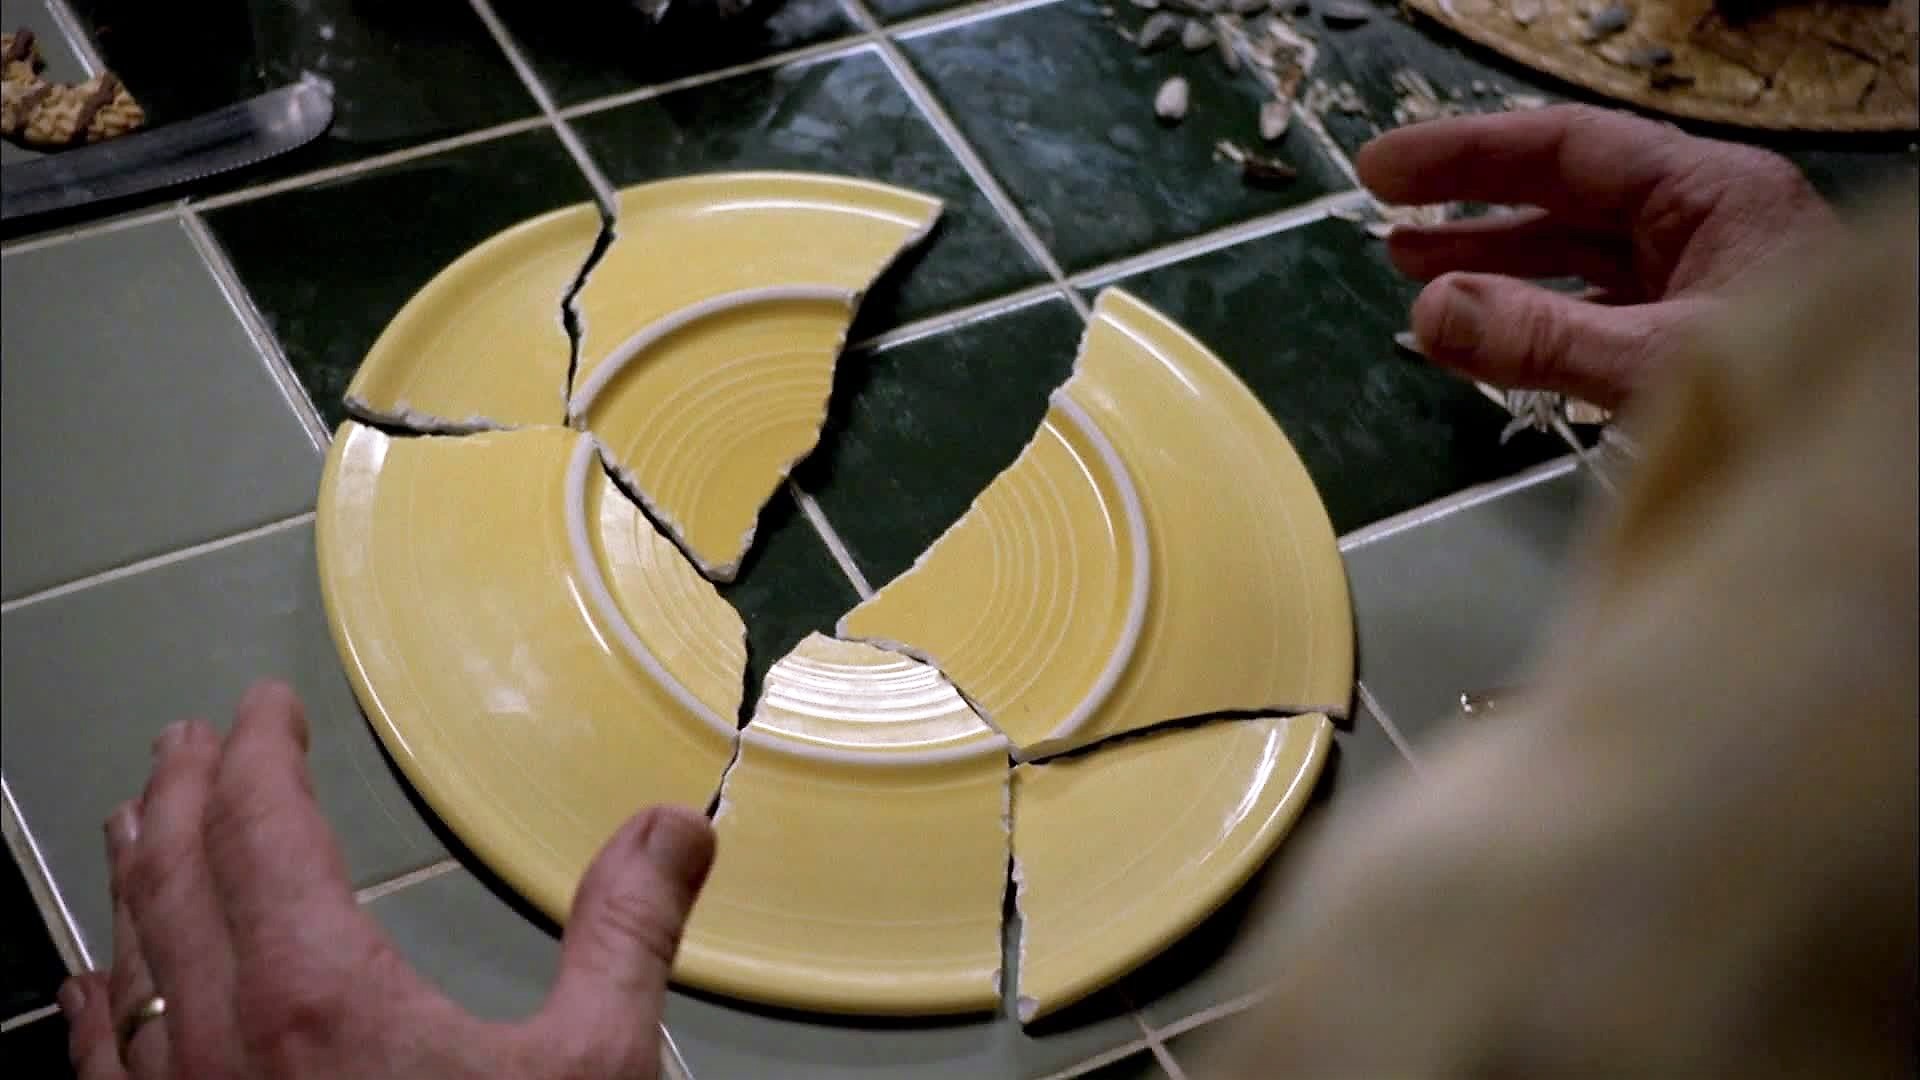 Бьются блюдца. Разбитая тарелка. Разбитые тарелки. Битая посуда. Треснувшая тарелка.